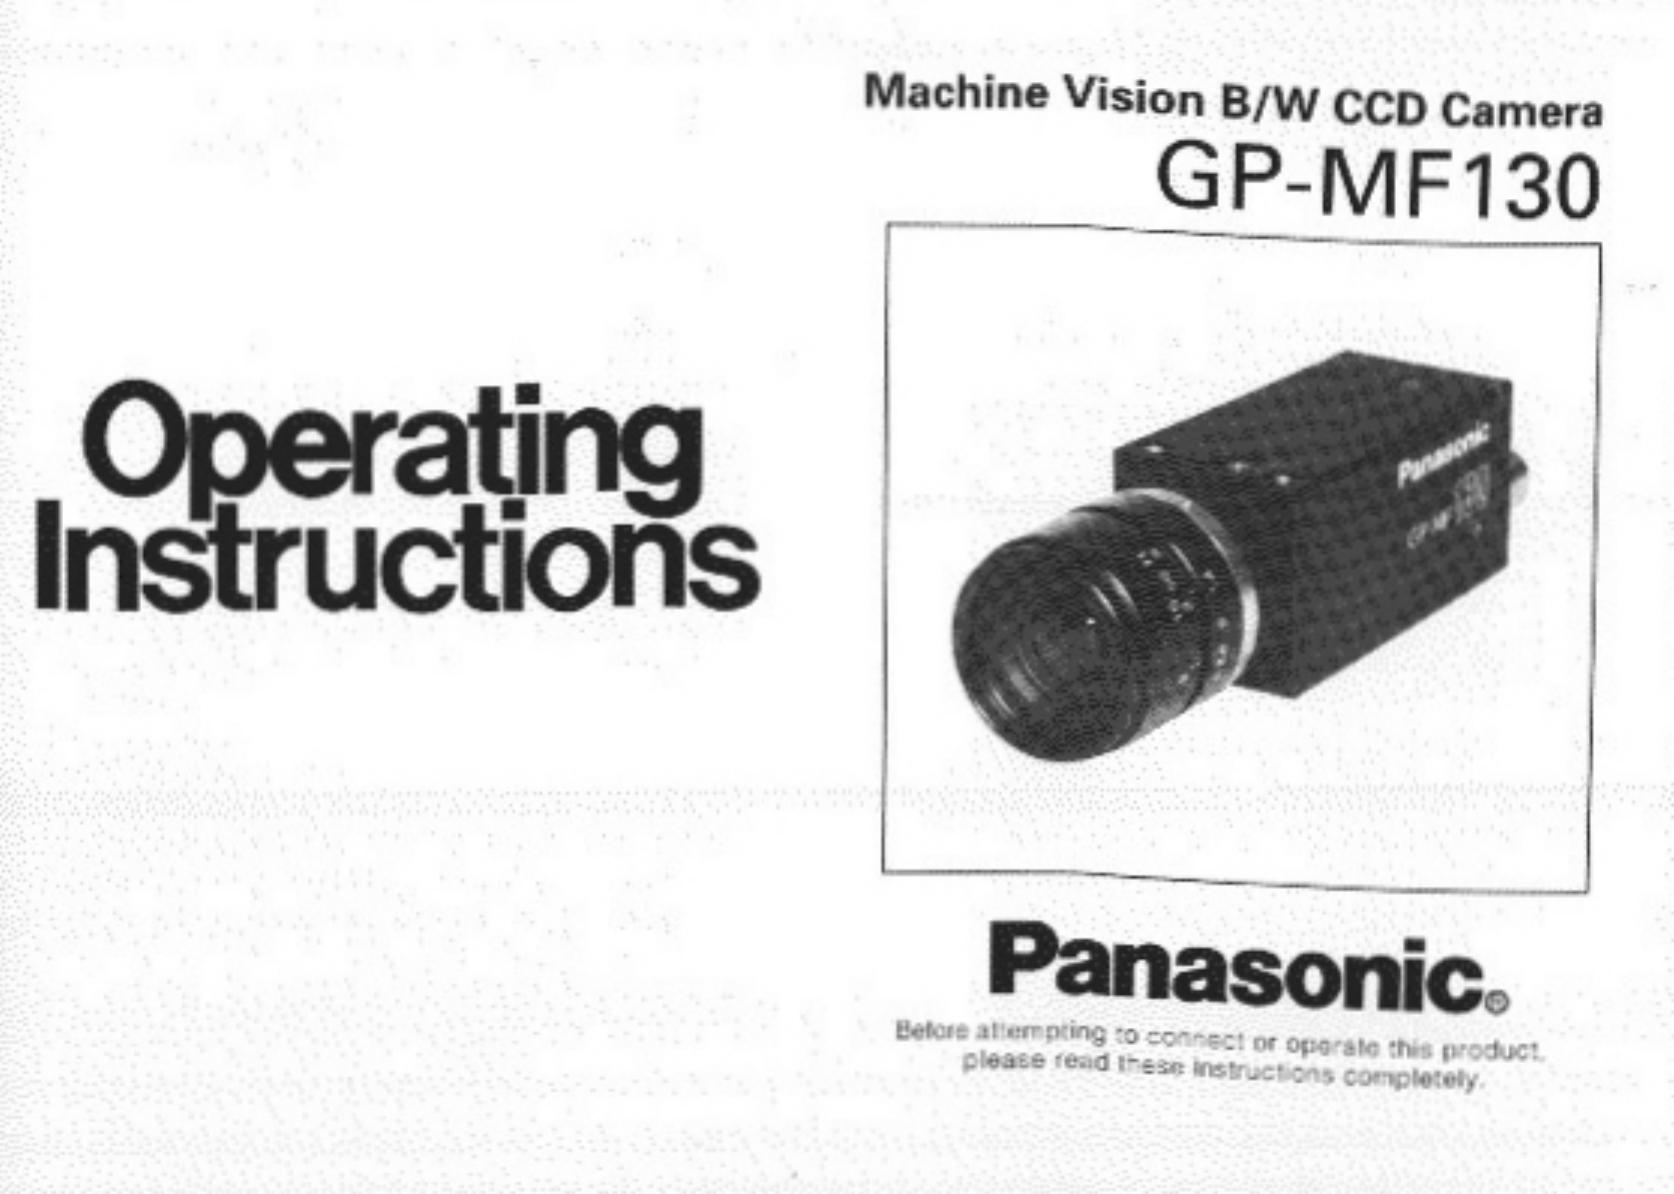 Panasonic GP-MF130 Security Camera User Manual